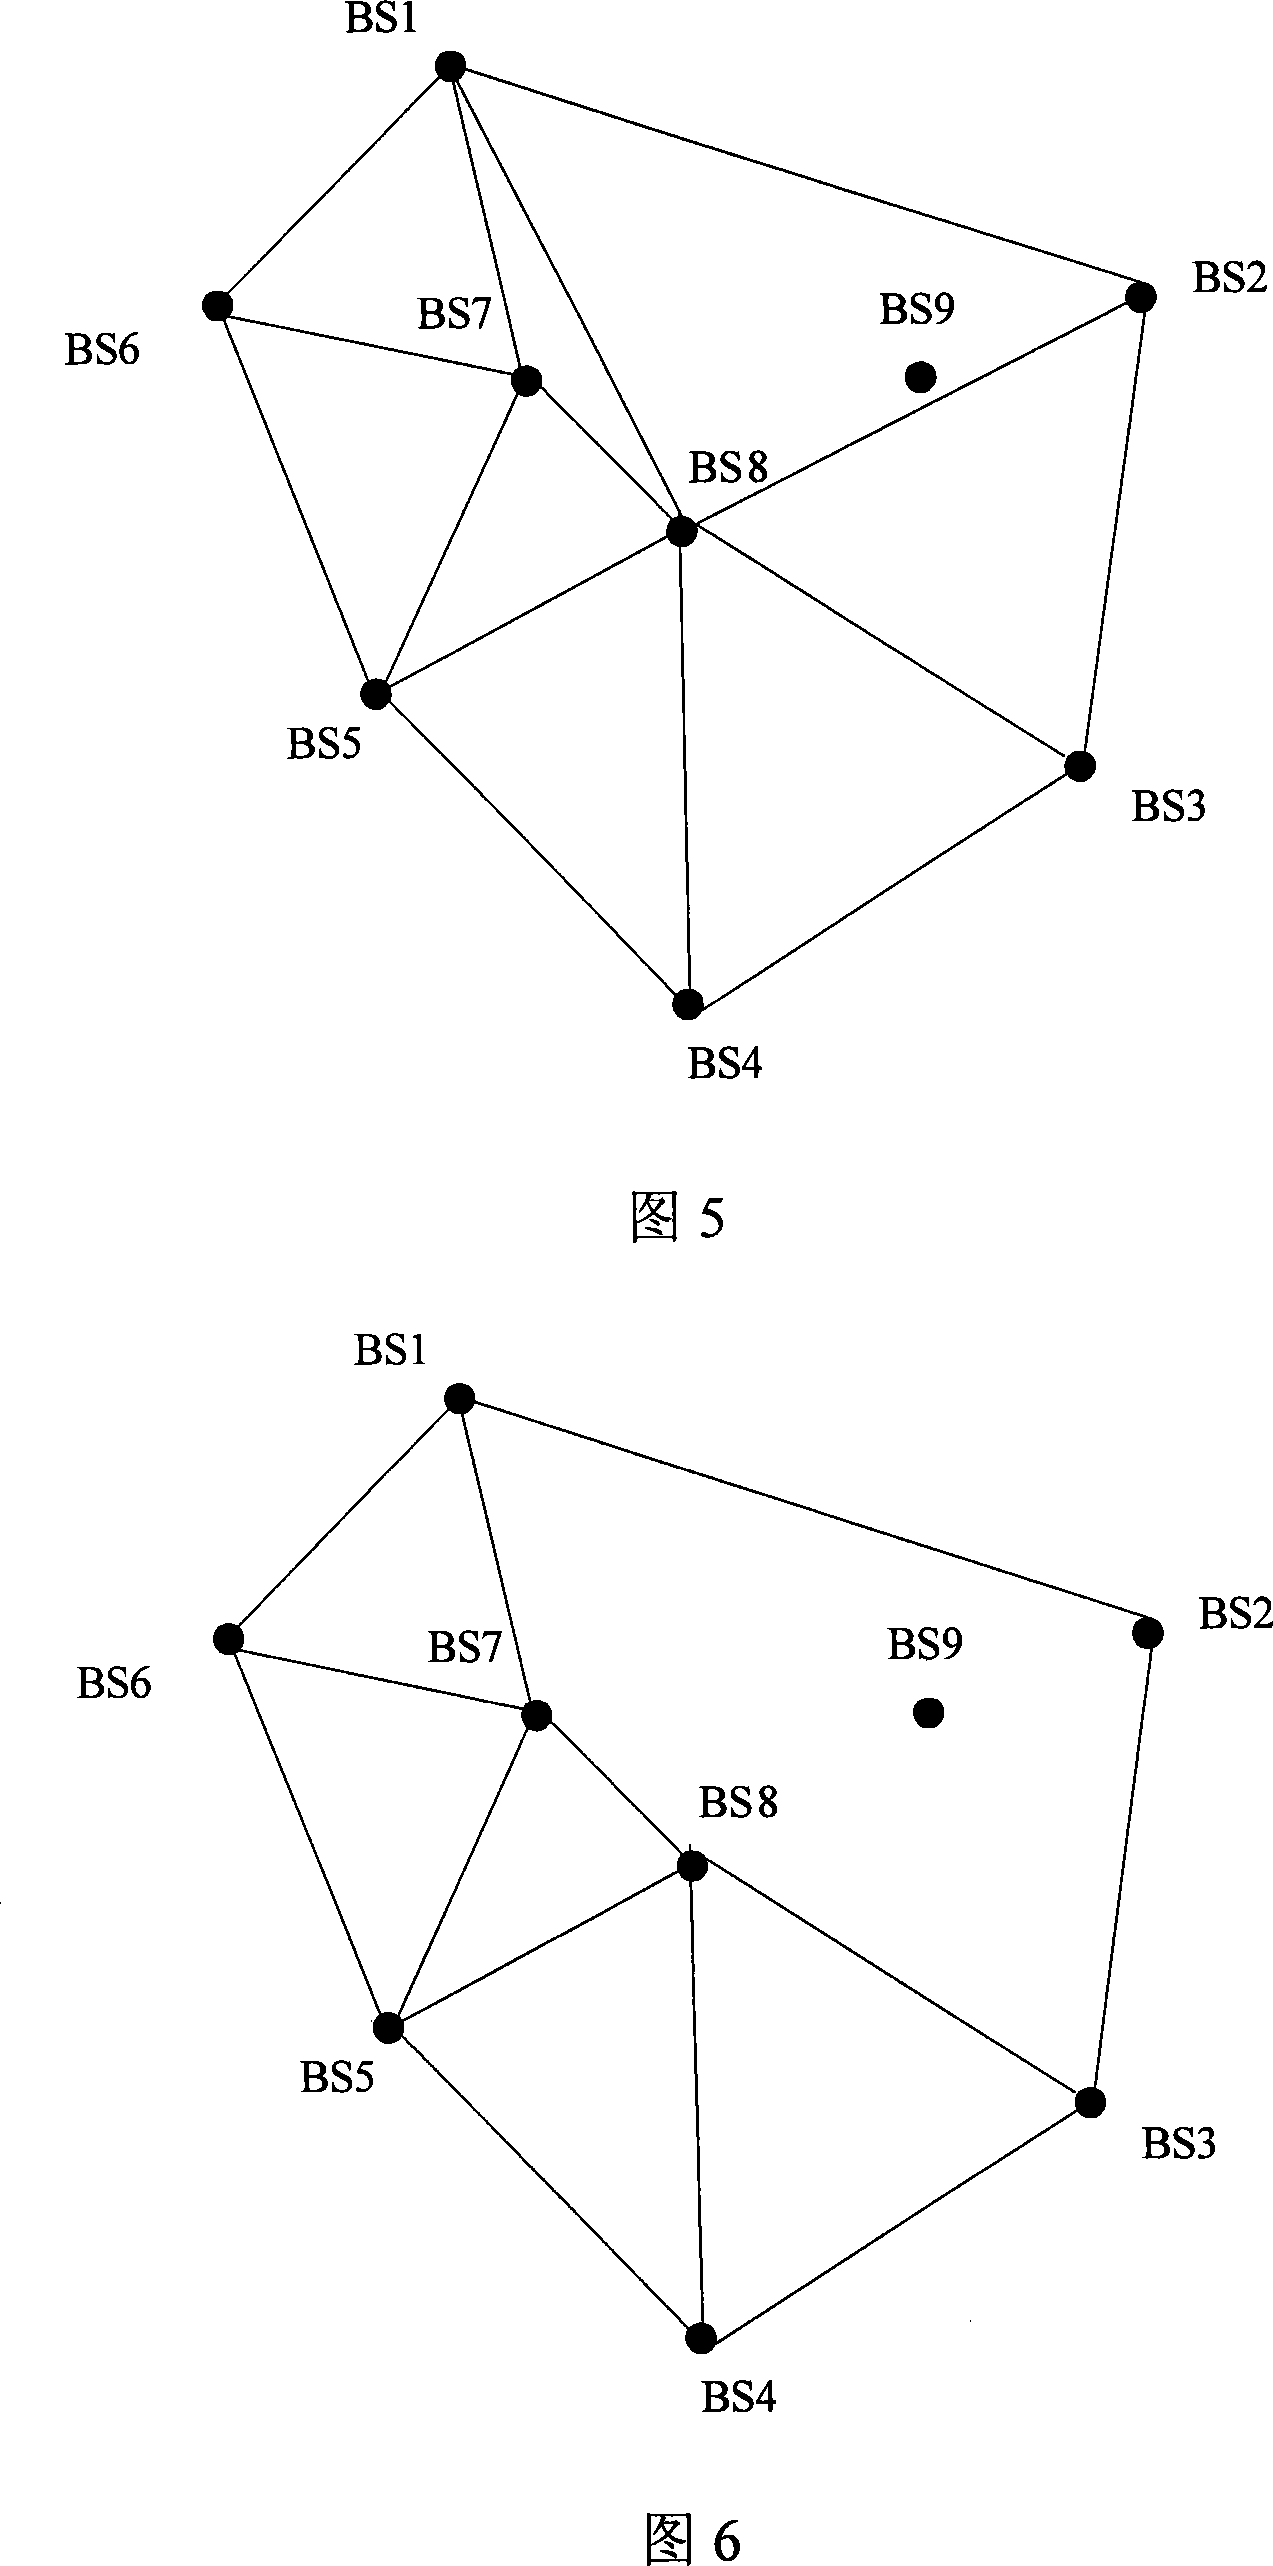 Adjacent cell planning method for mobile honeycomb network